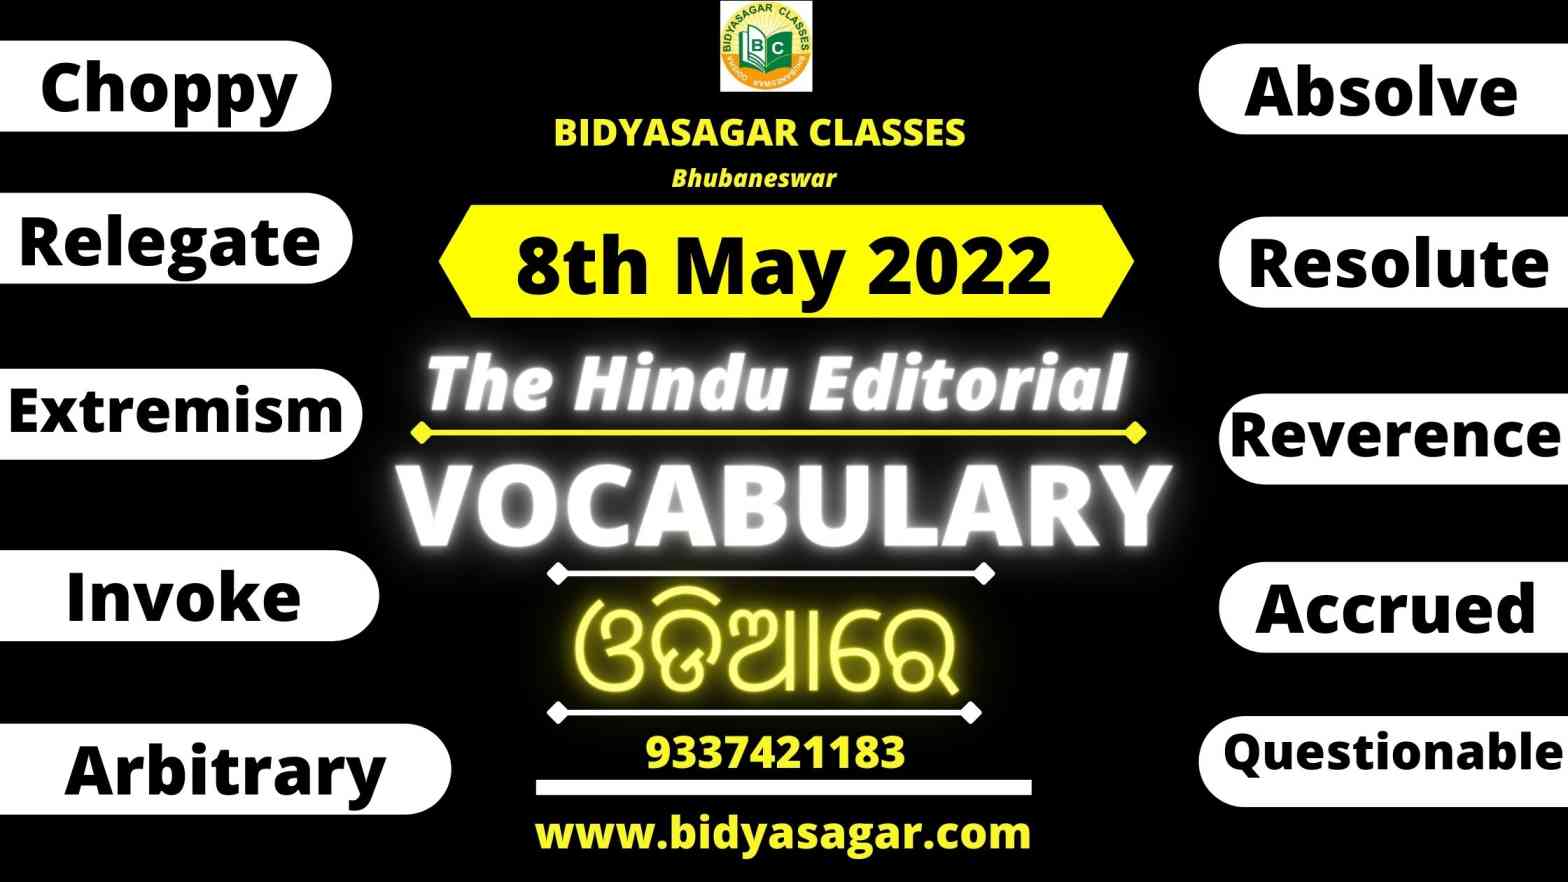 The Hindu Editorial Vocabulary of 8th May 2022